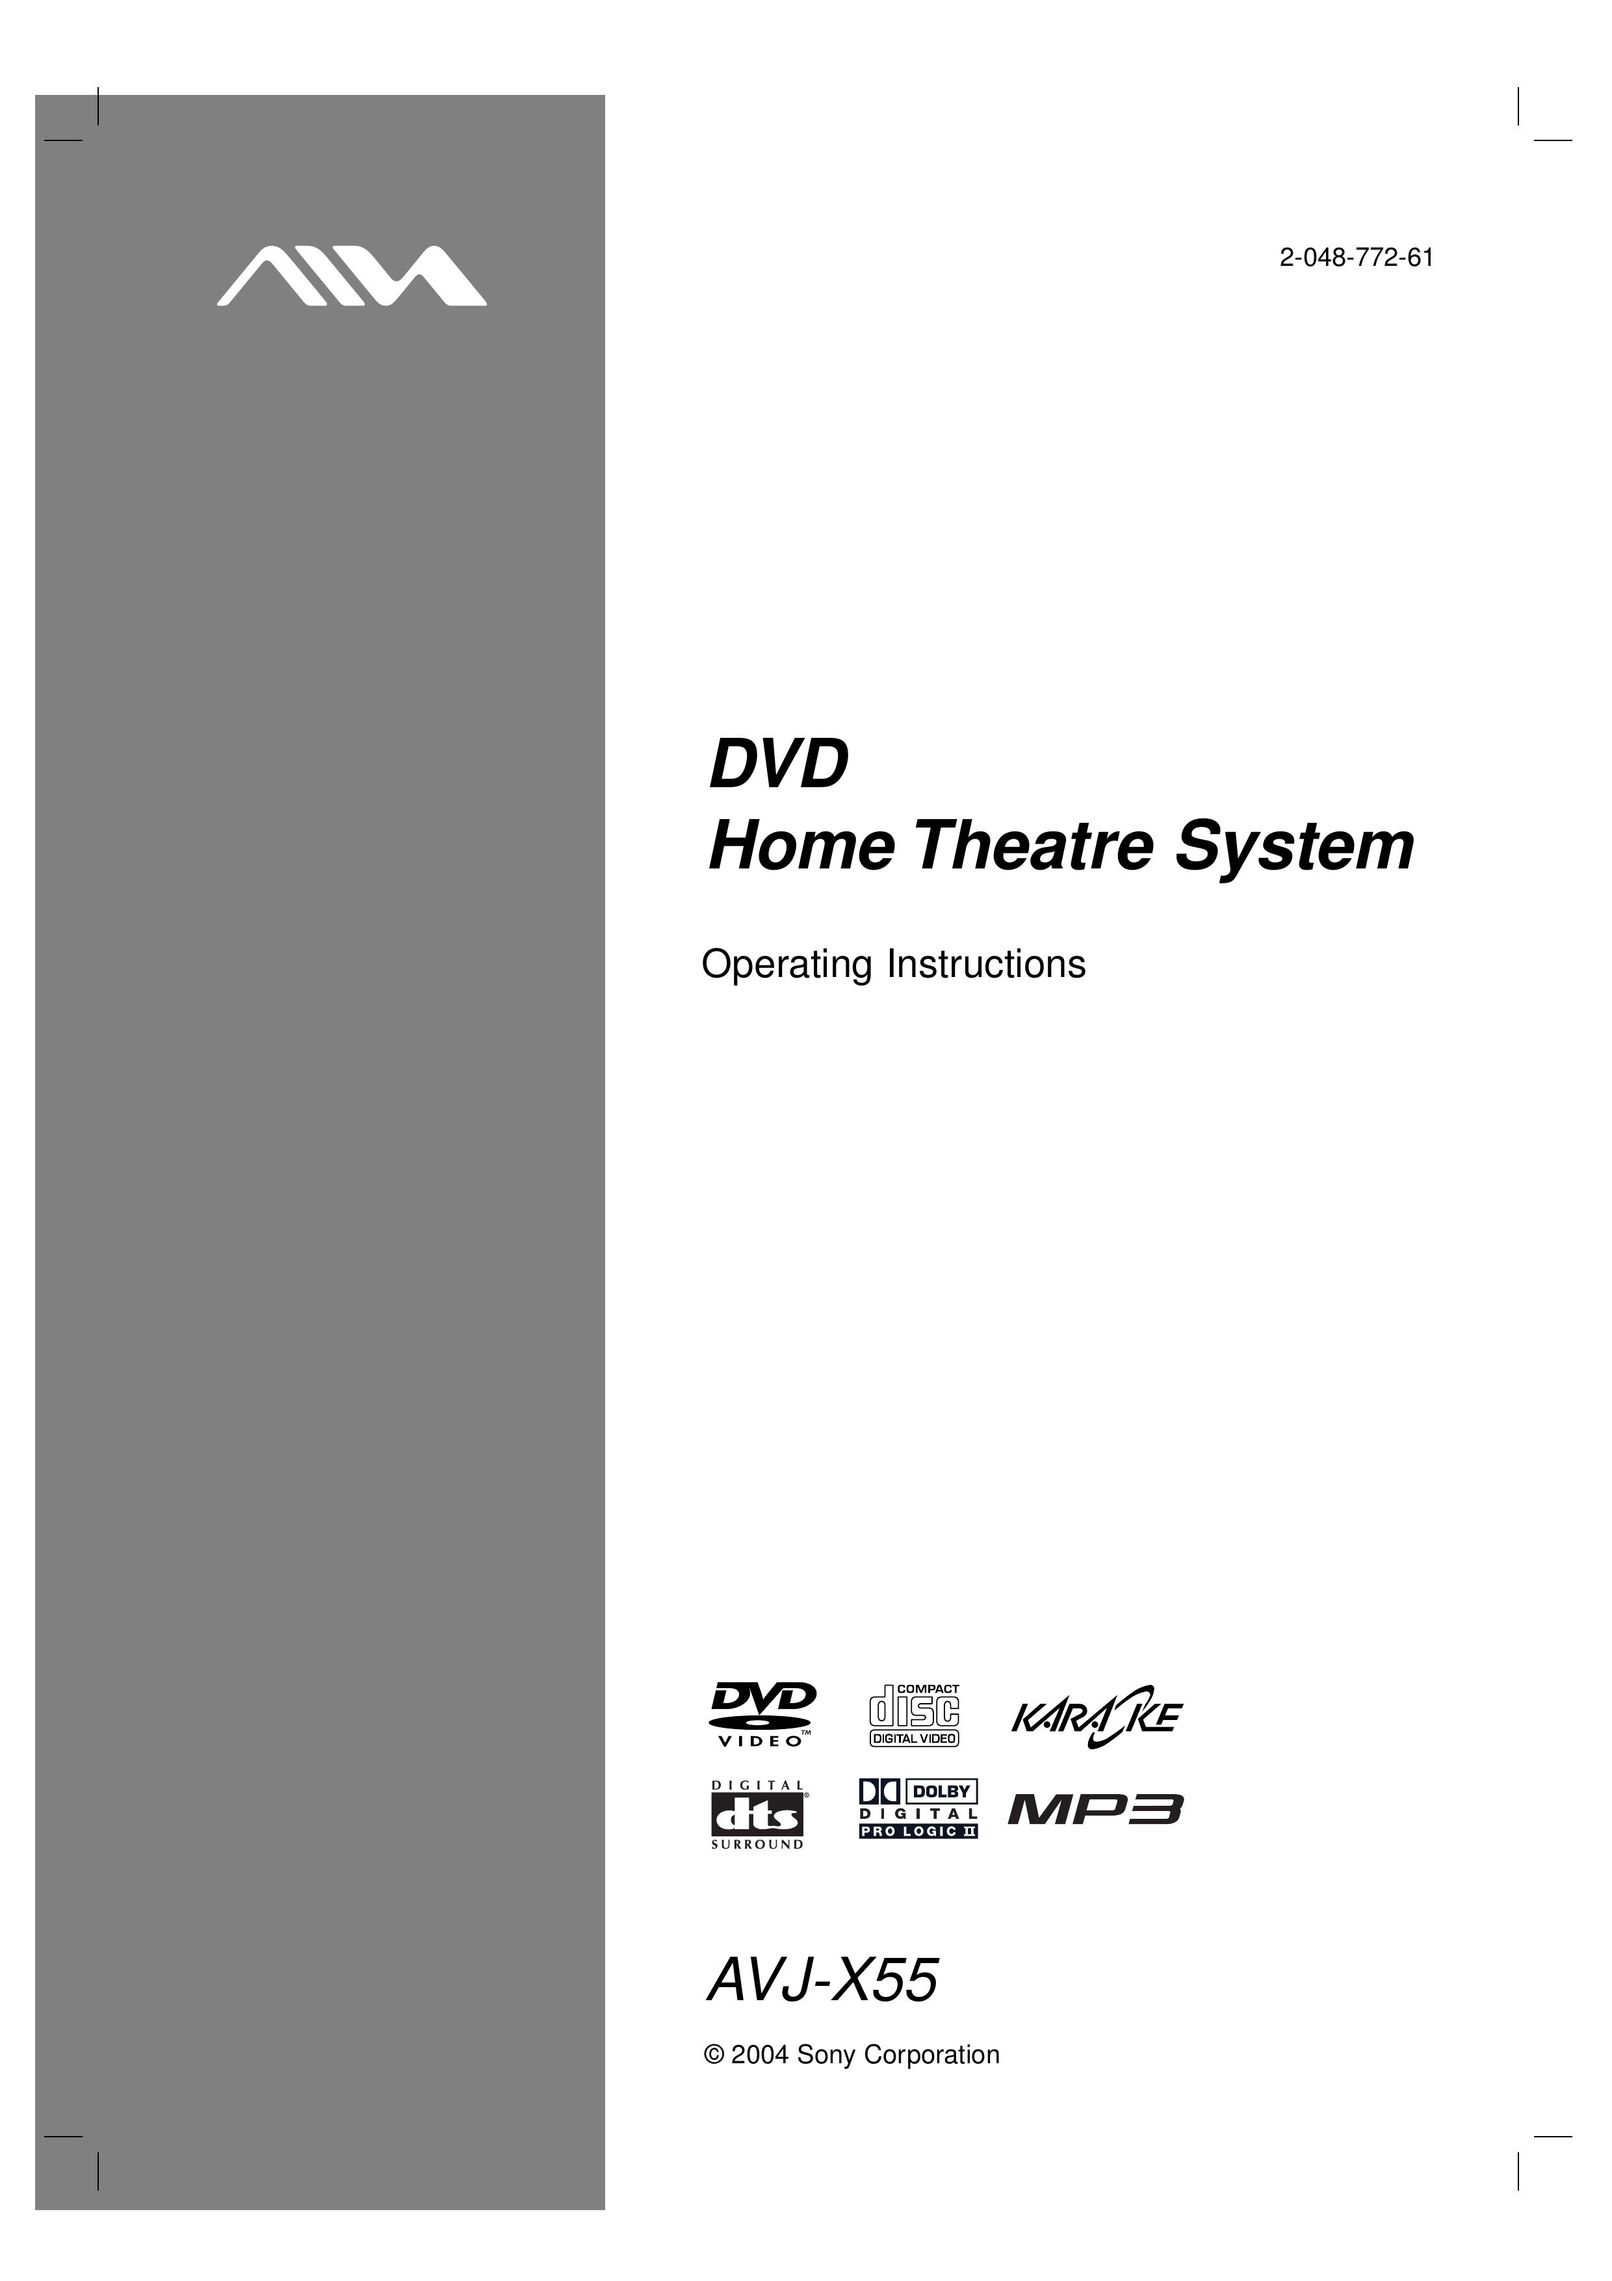 Sony AVJ-X55 Home Theater System User Manual